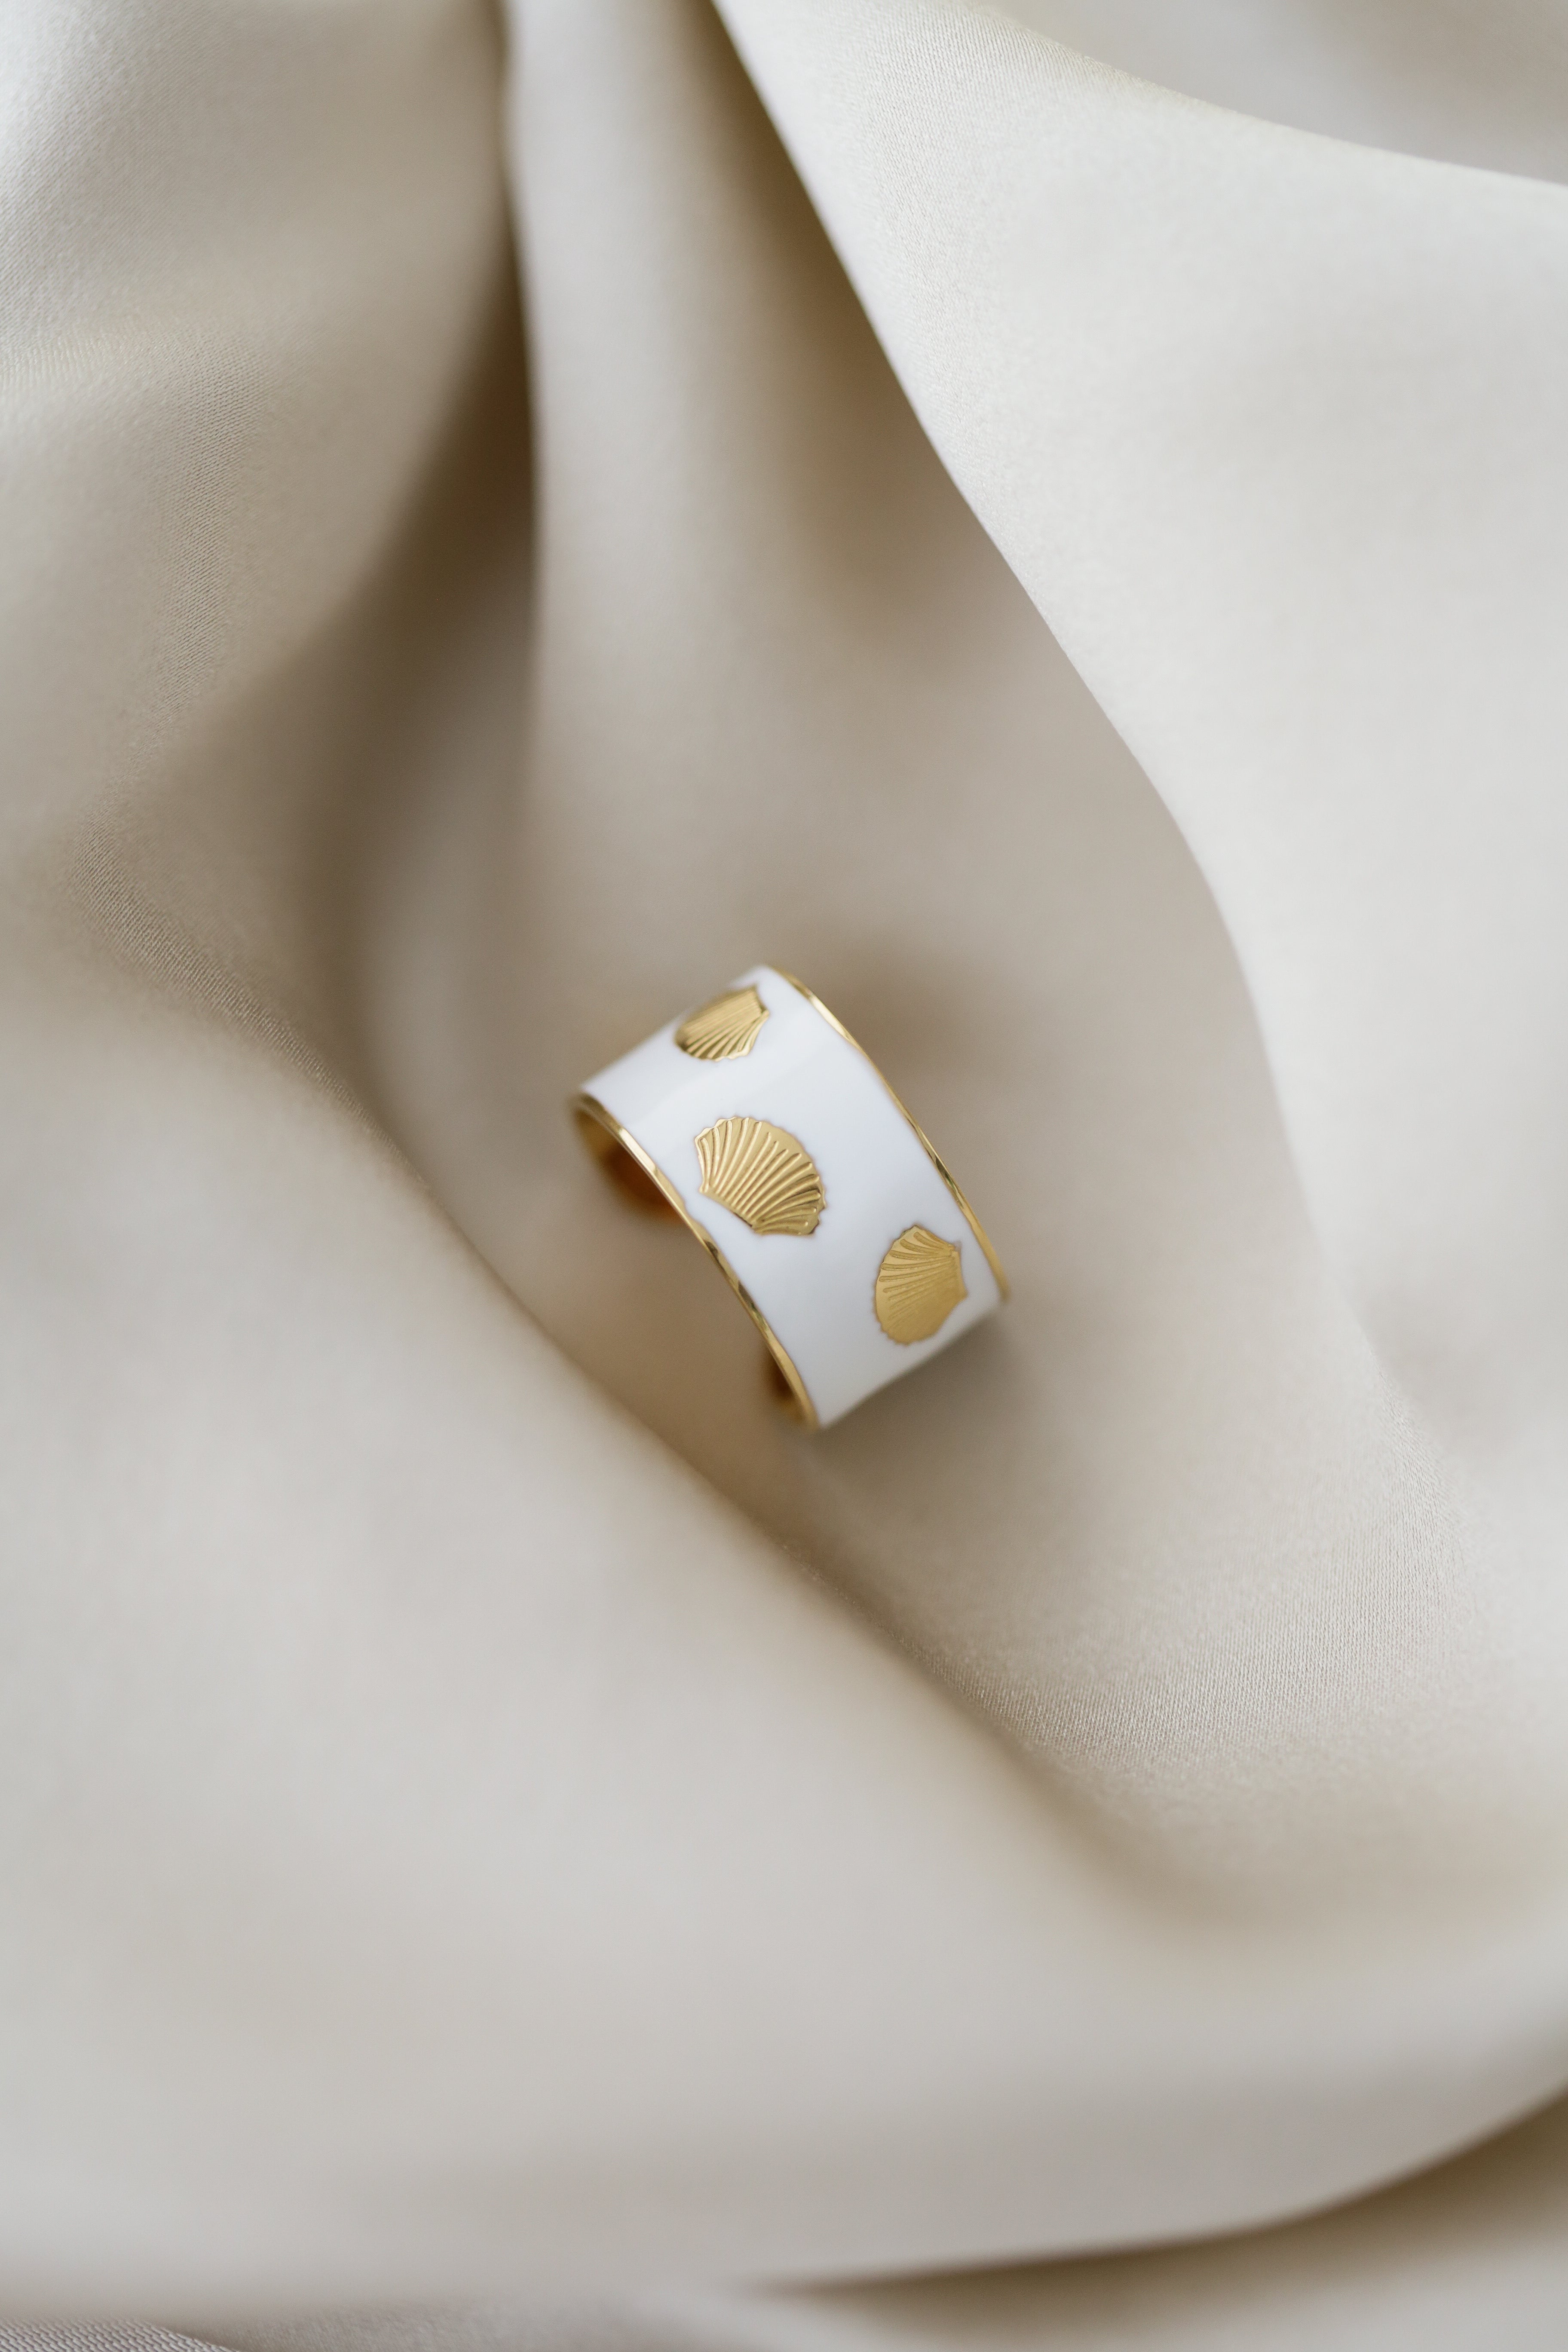 Xara Ring - Boutique Minimaliste has waterproof, durable, elegant and vintage inspired jewelry